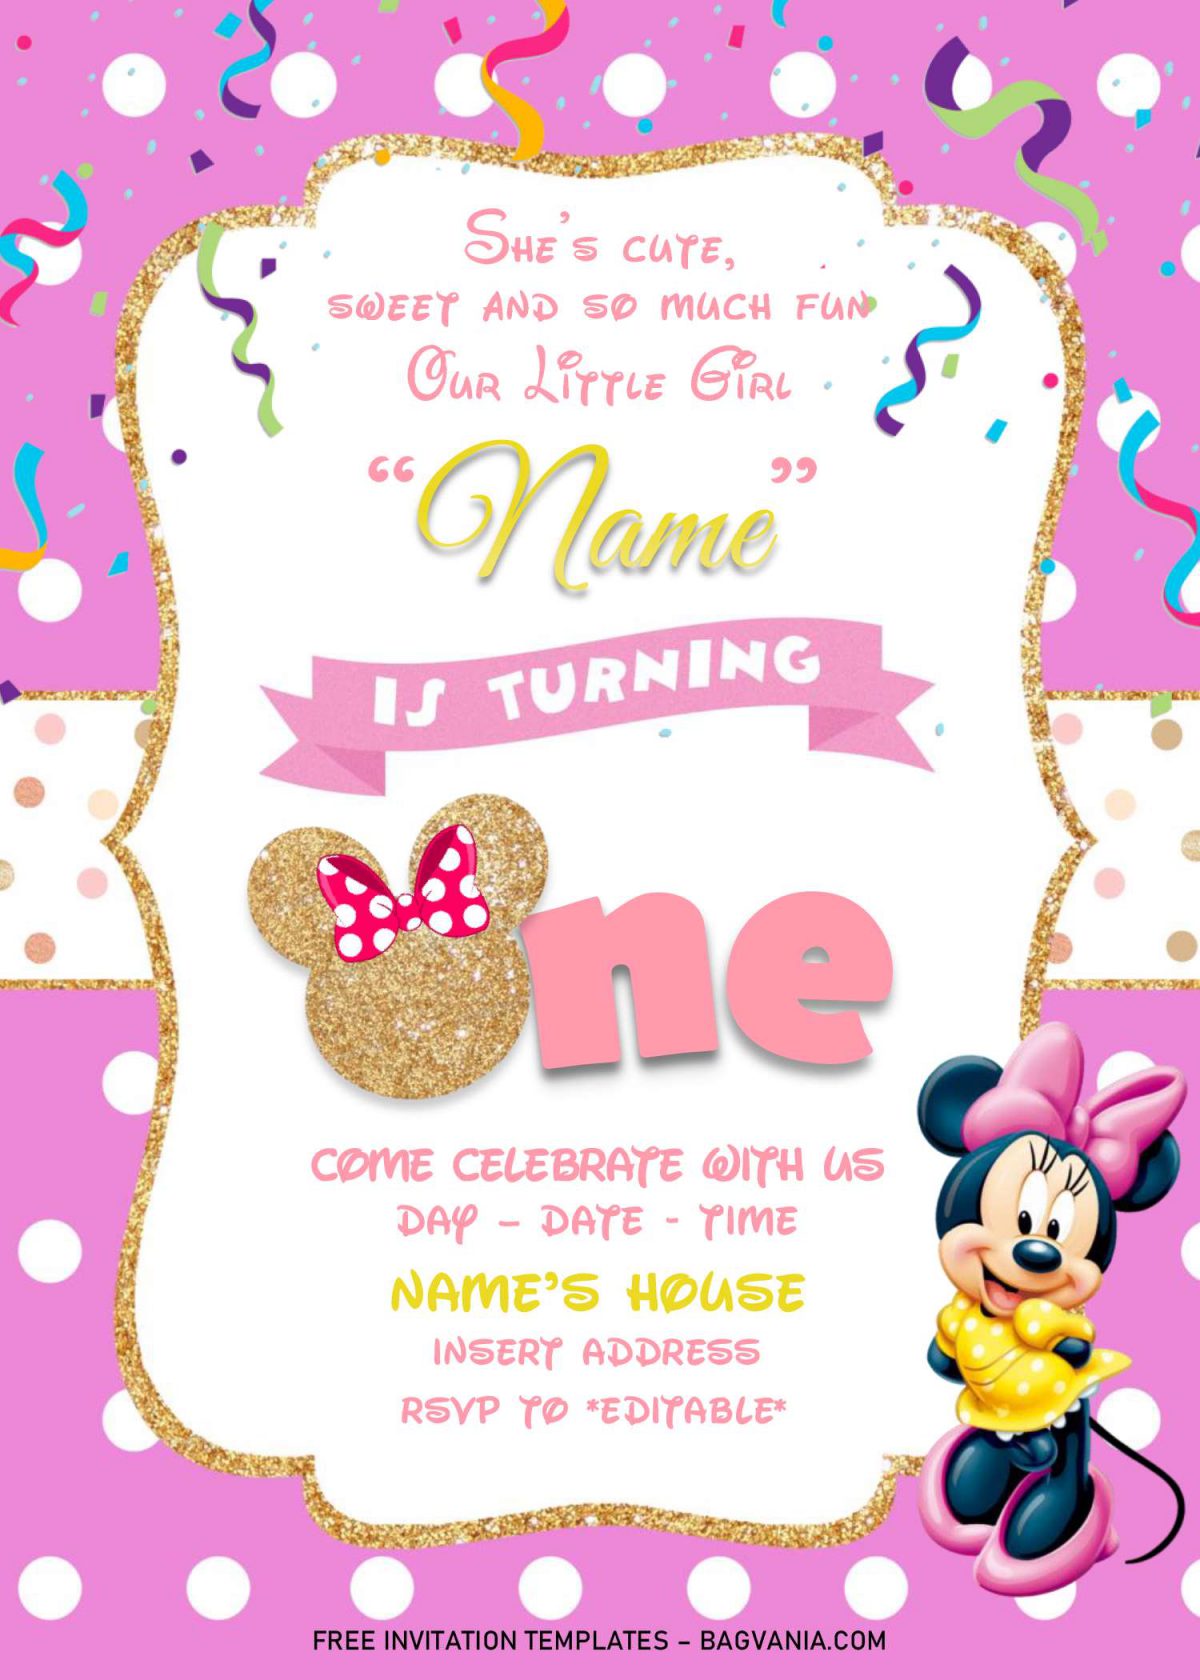 Gold Glitter Minnie Mouse Invitation Templates - Editable .Docx and has portrait orientation